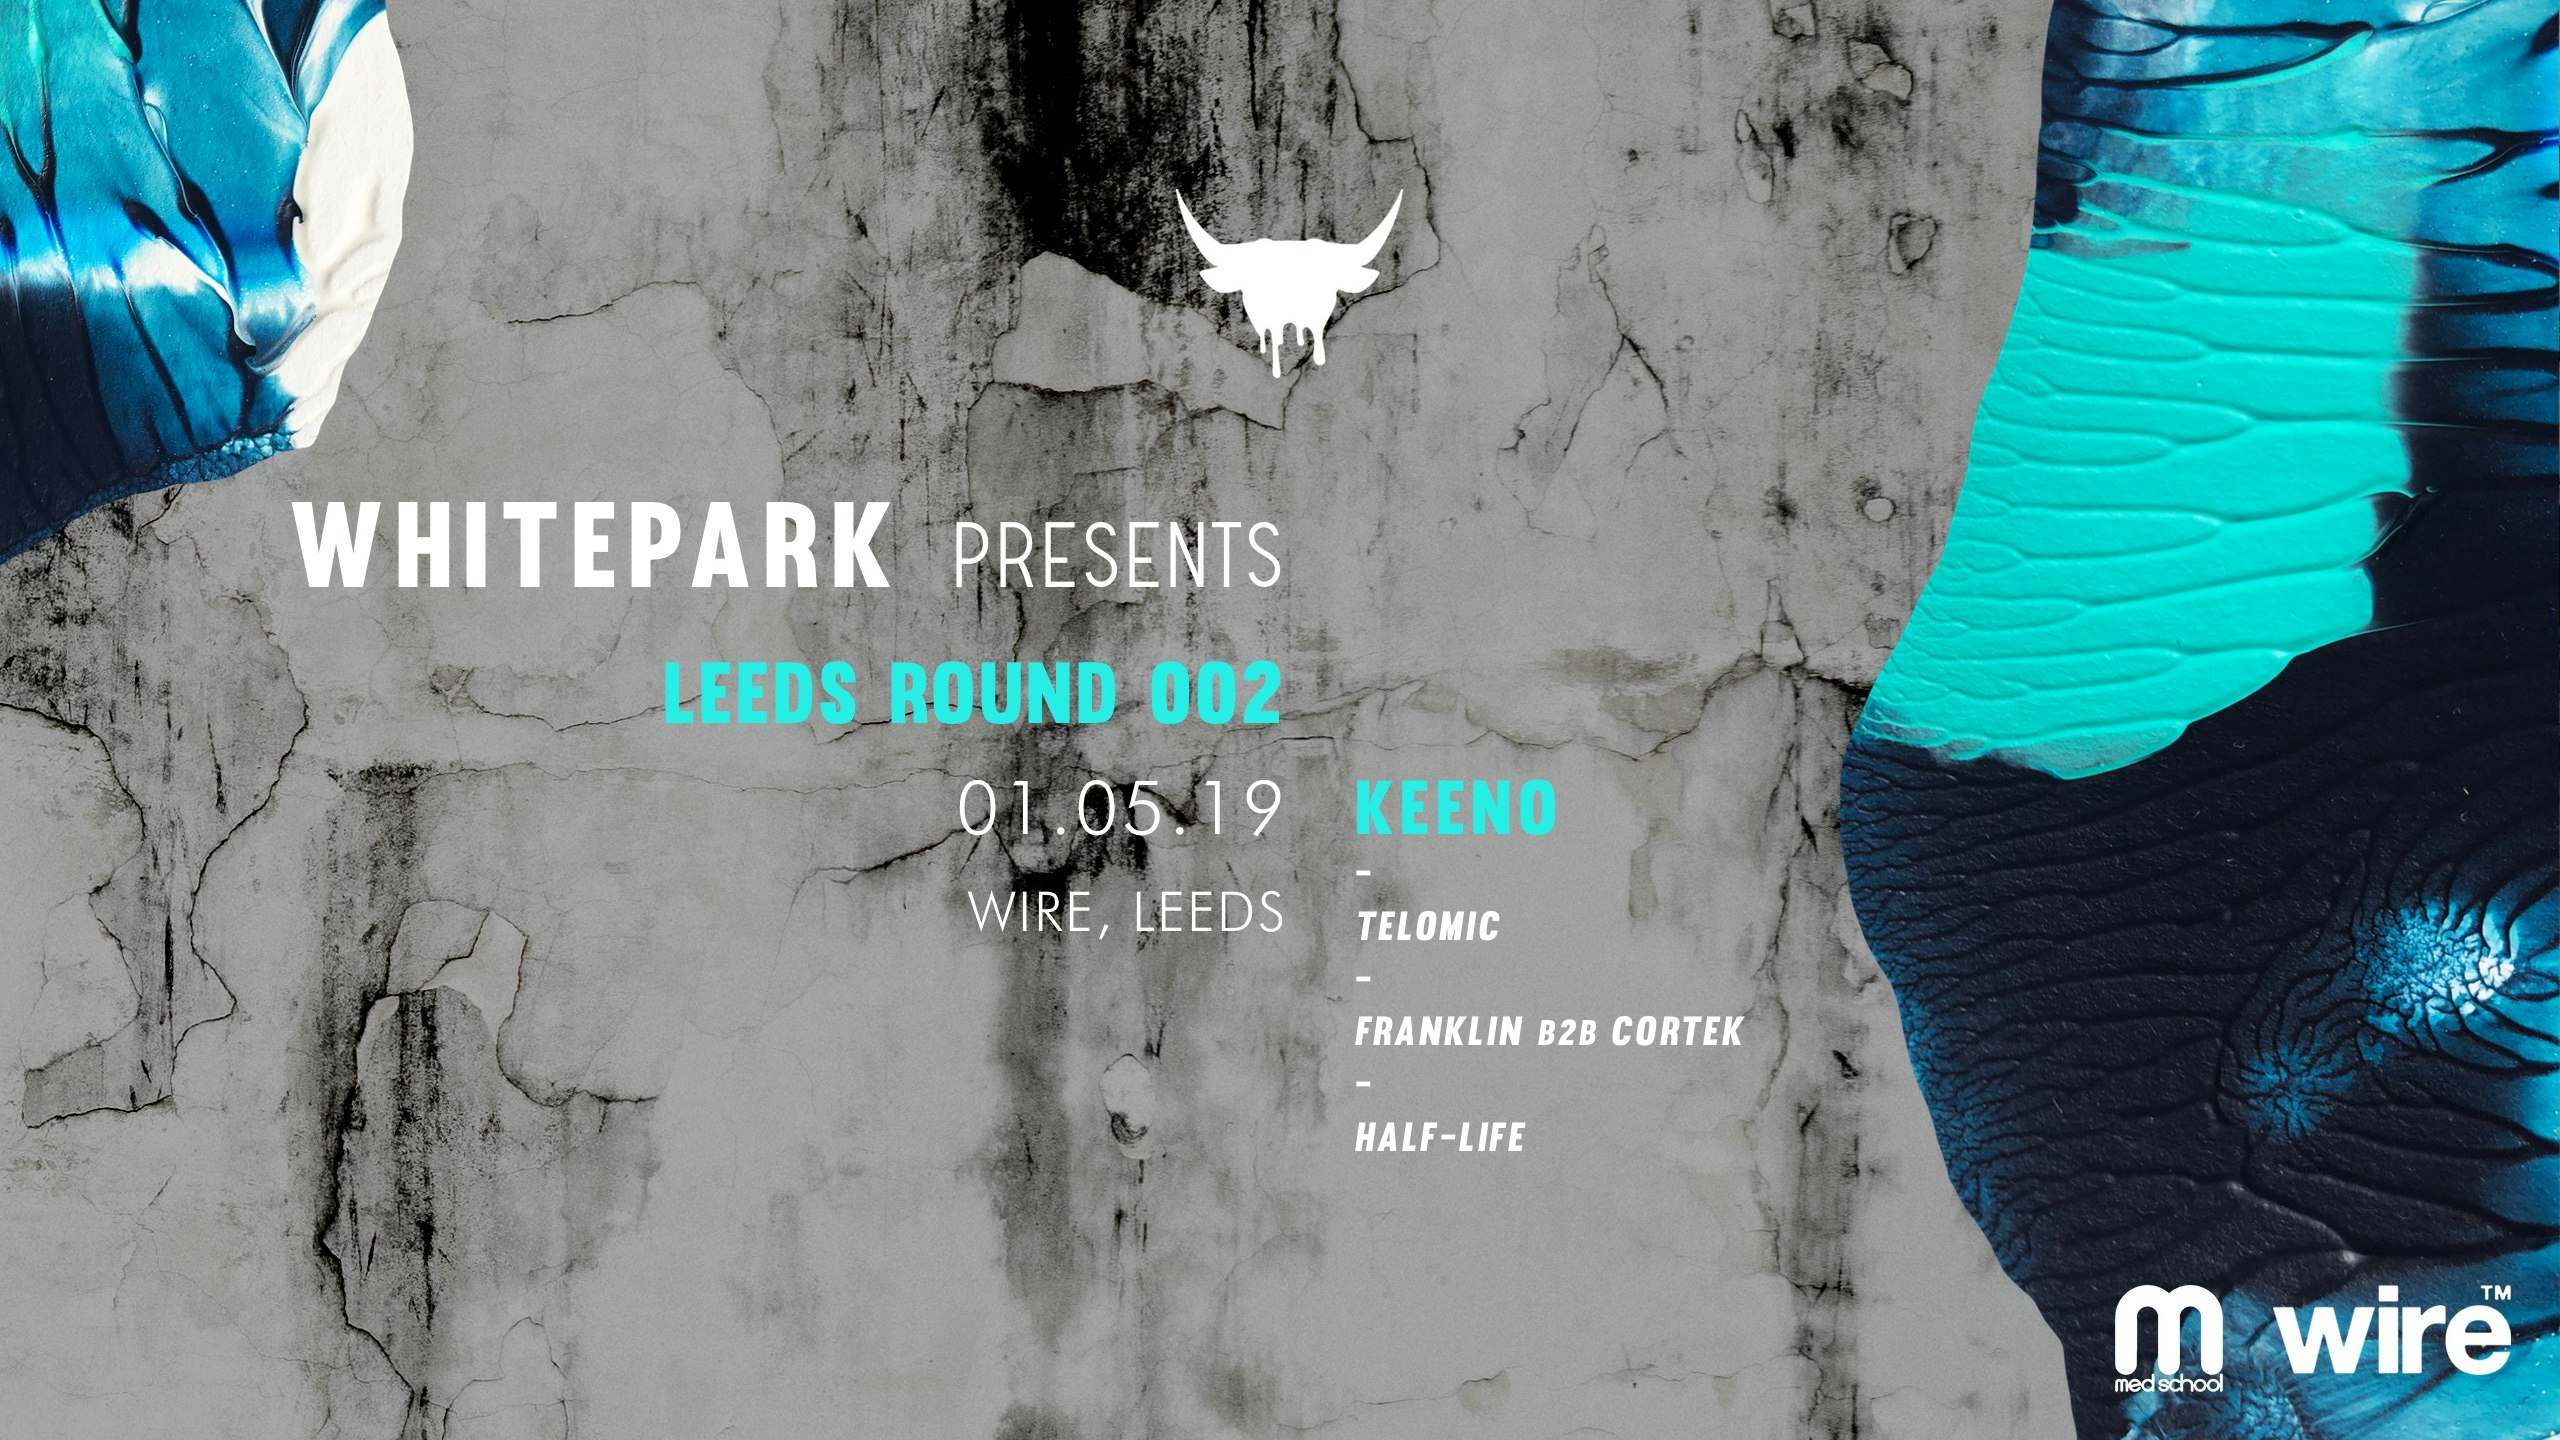 Whitepark Presents: Leeds Round 002 w/ Keeno, Telomic + more